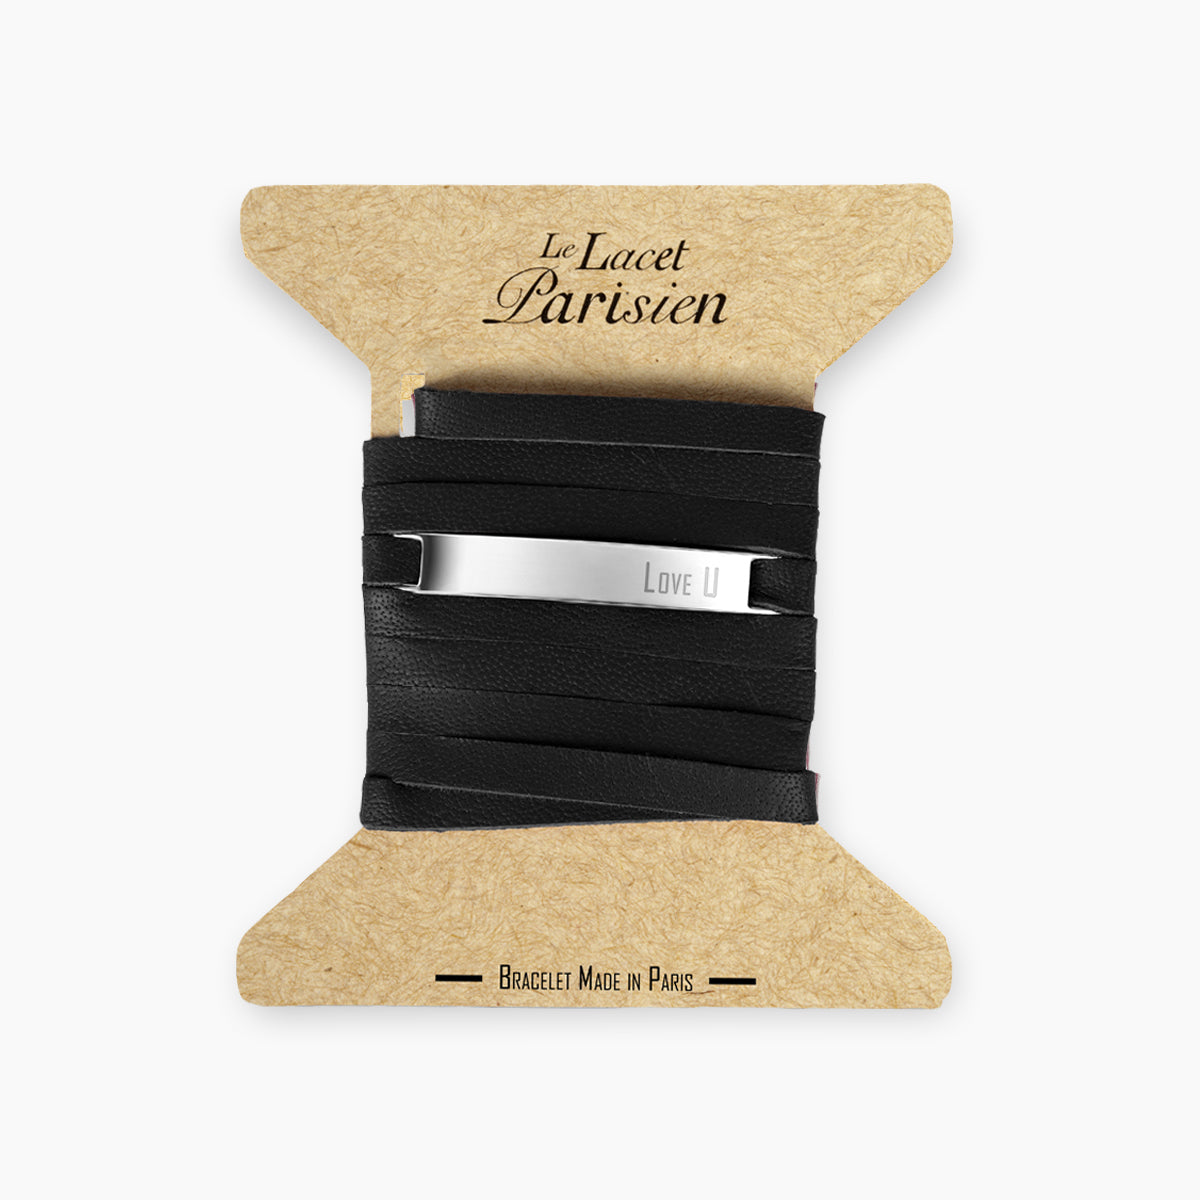 Bracelet message "LOVE U" noir